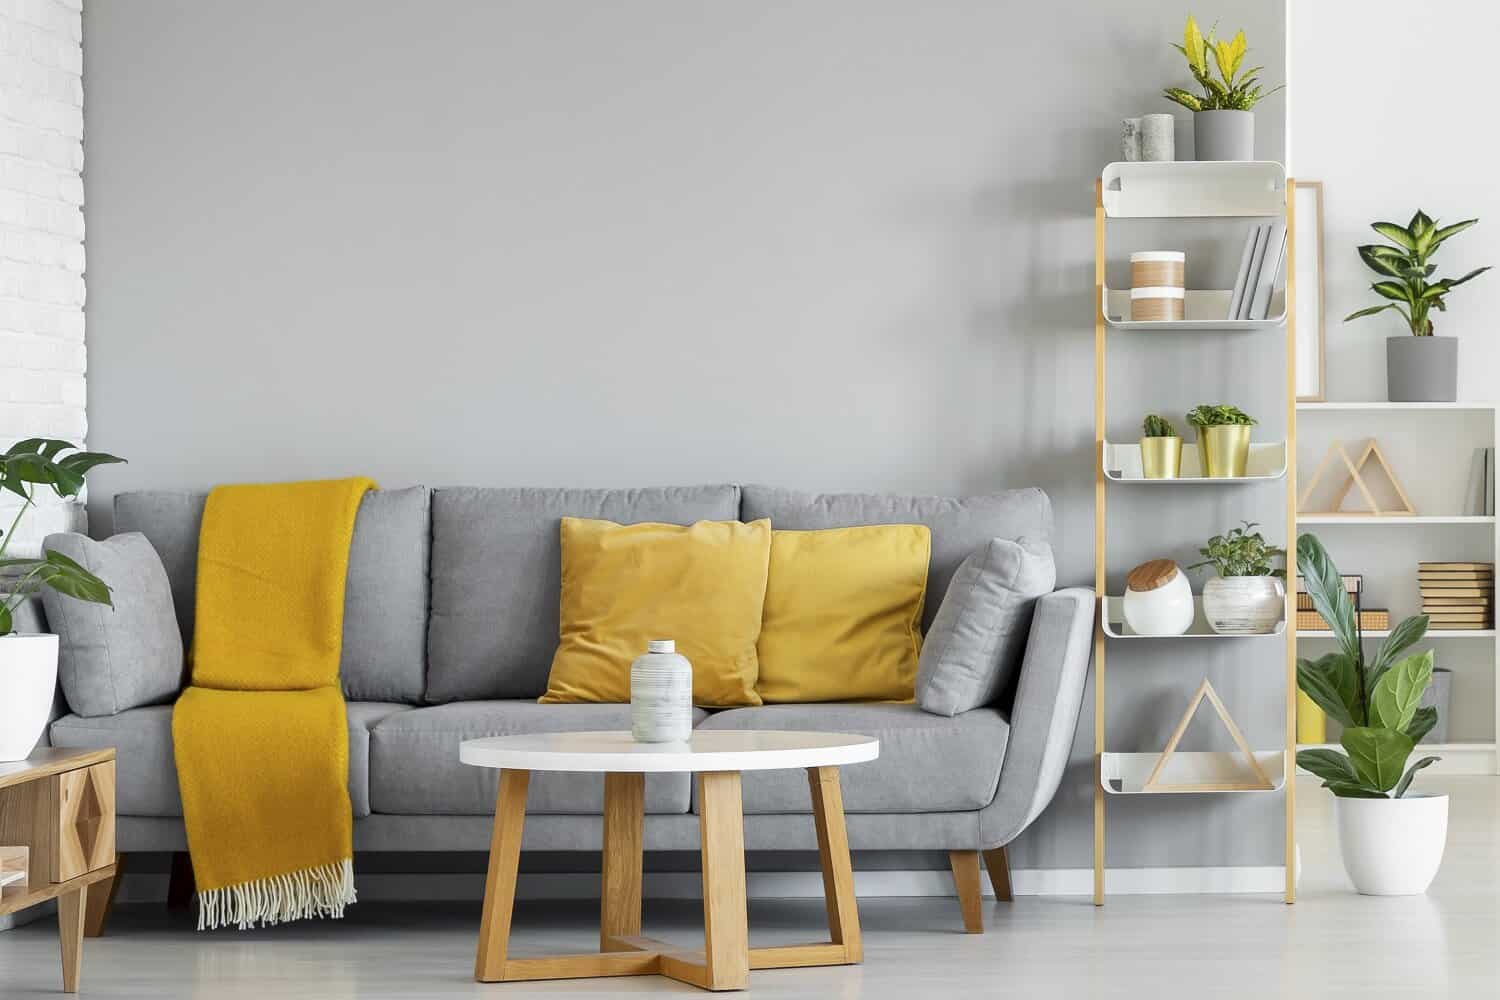 15 Stylish Succulent Shelf Ideas You Can Buy or Recreate